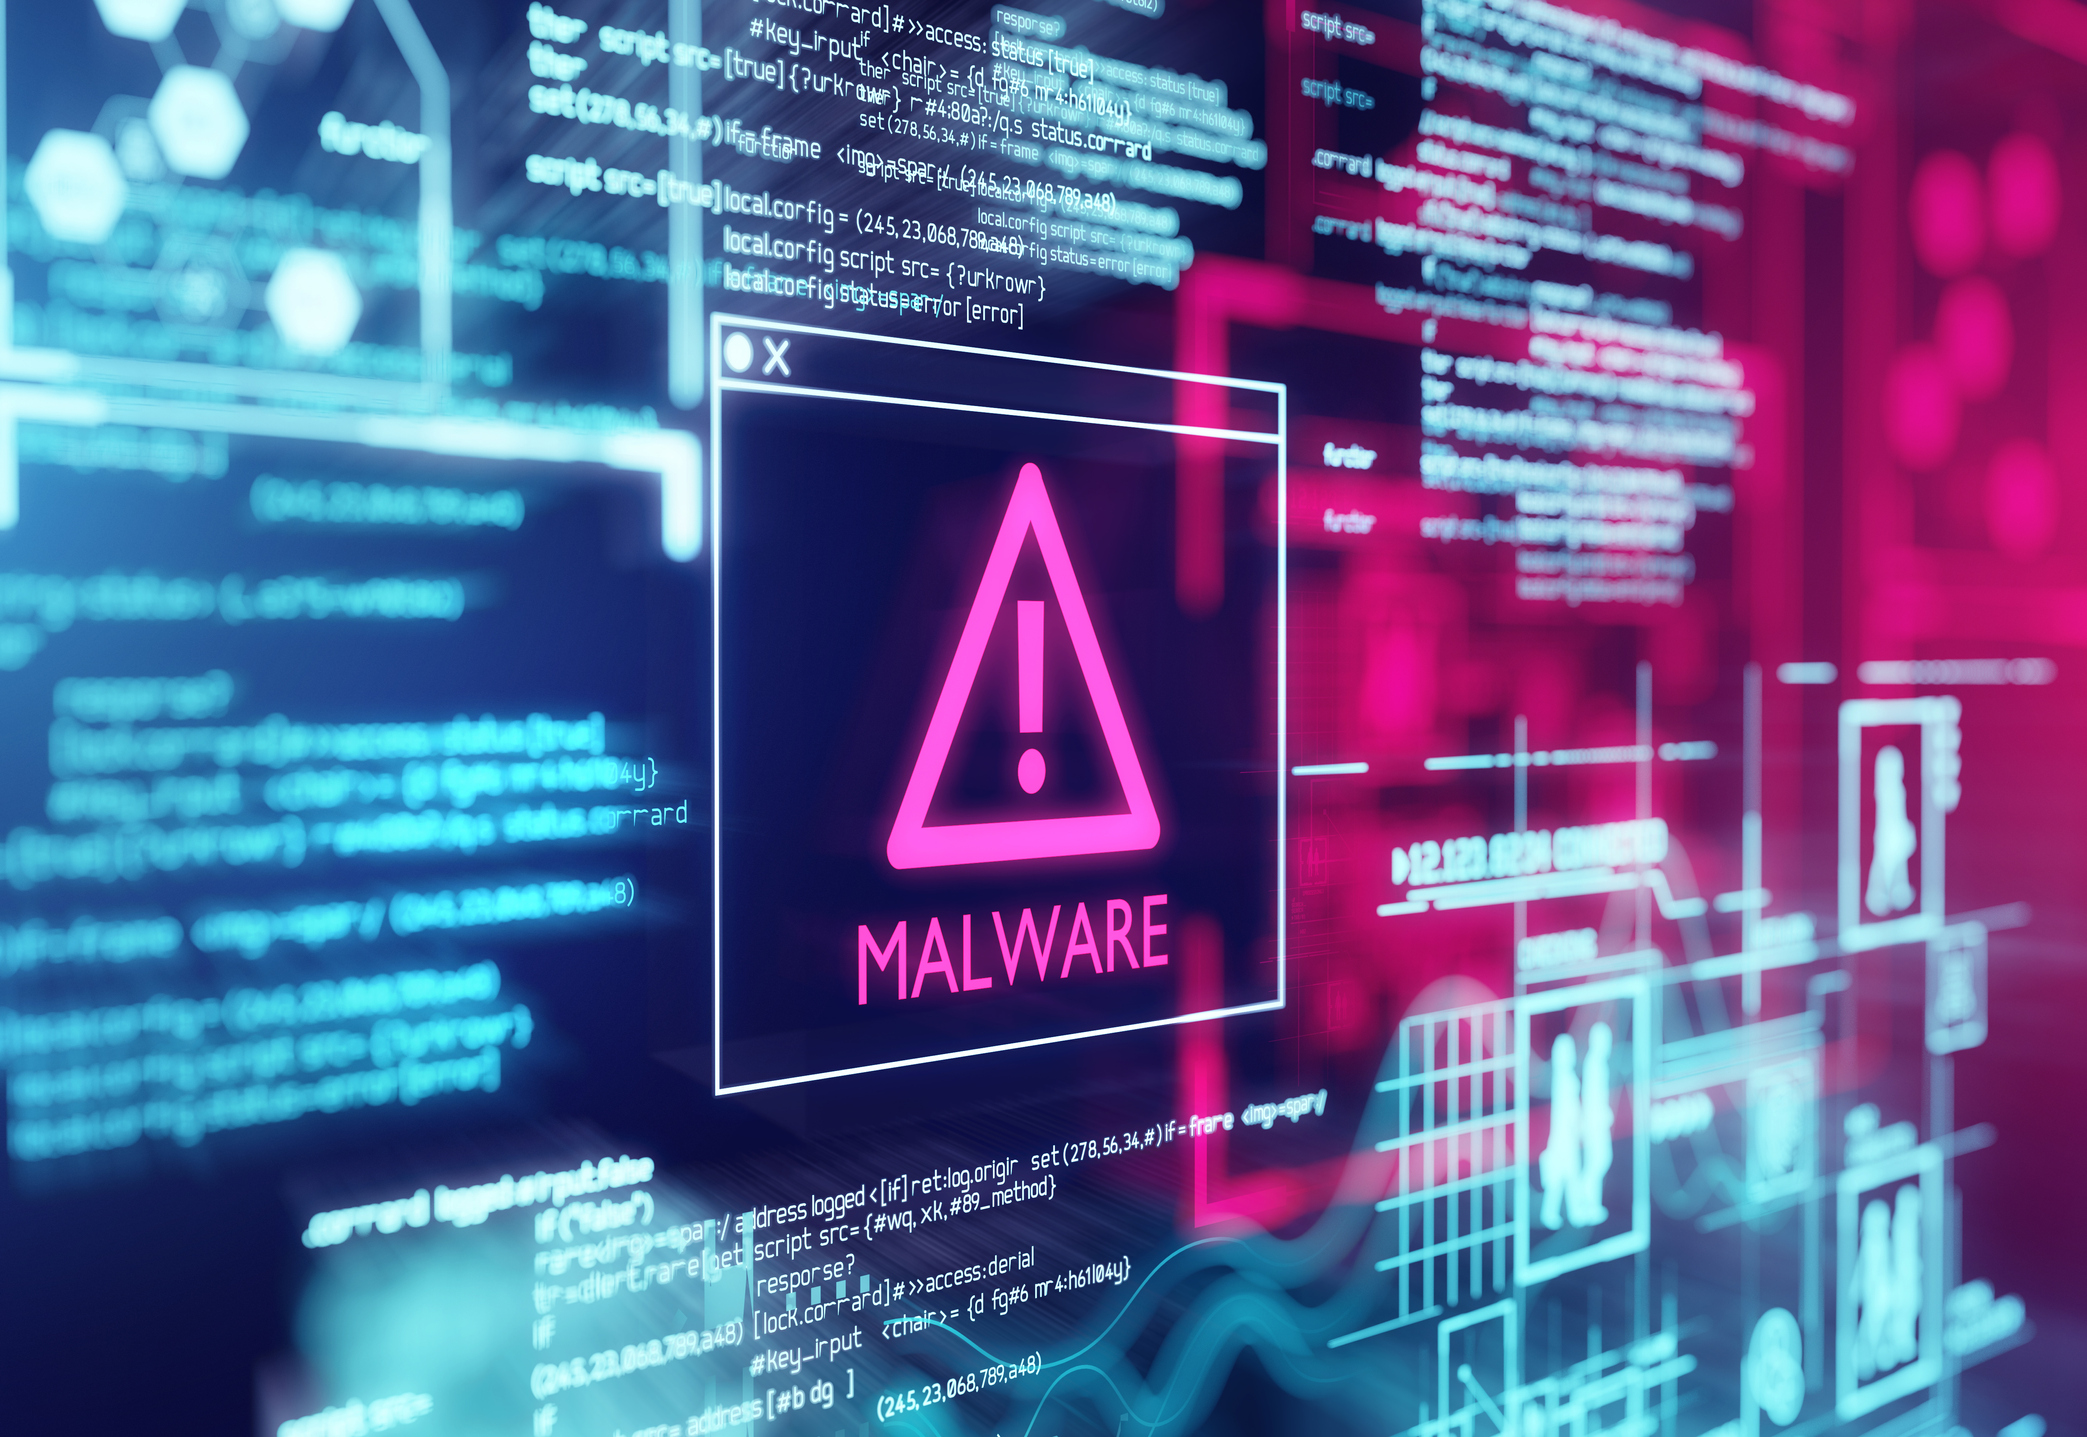 OneLaunch-is-not-malware